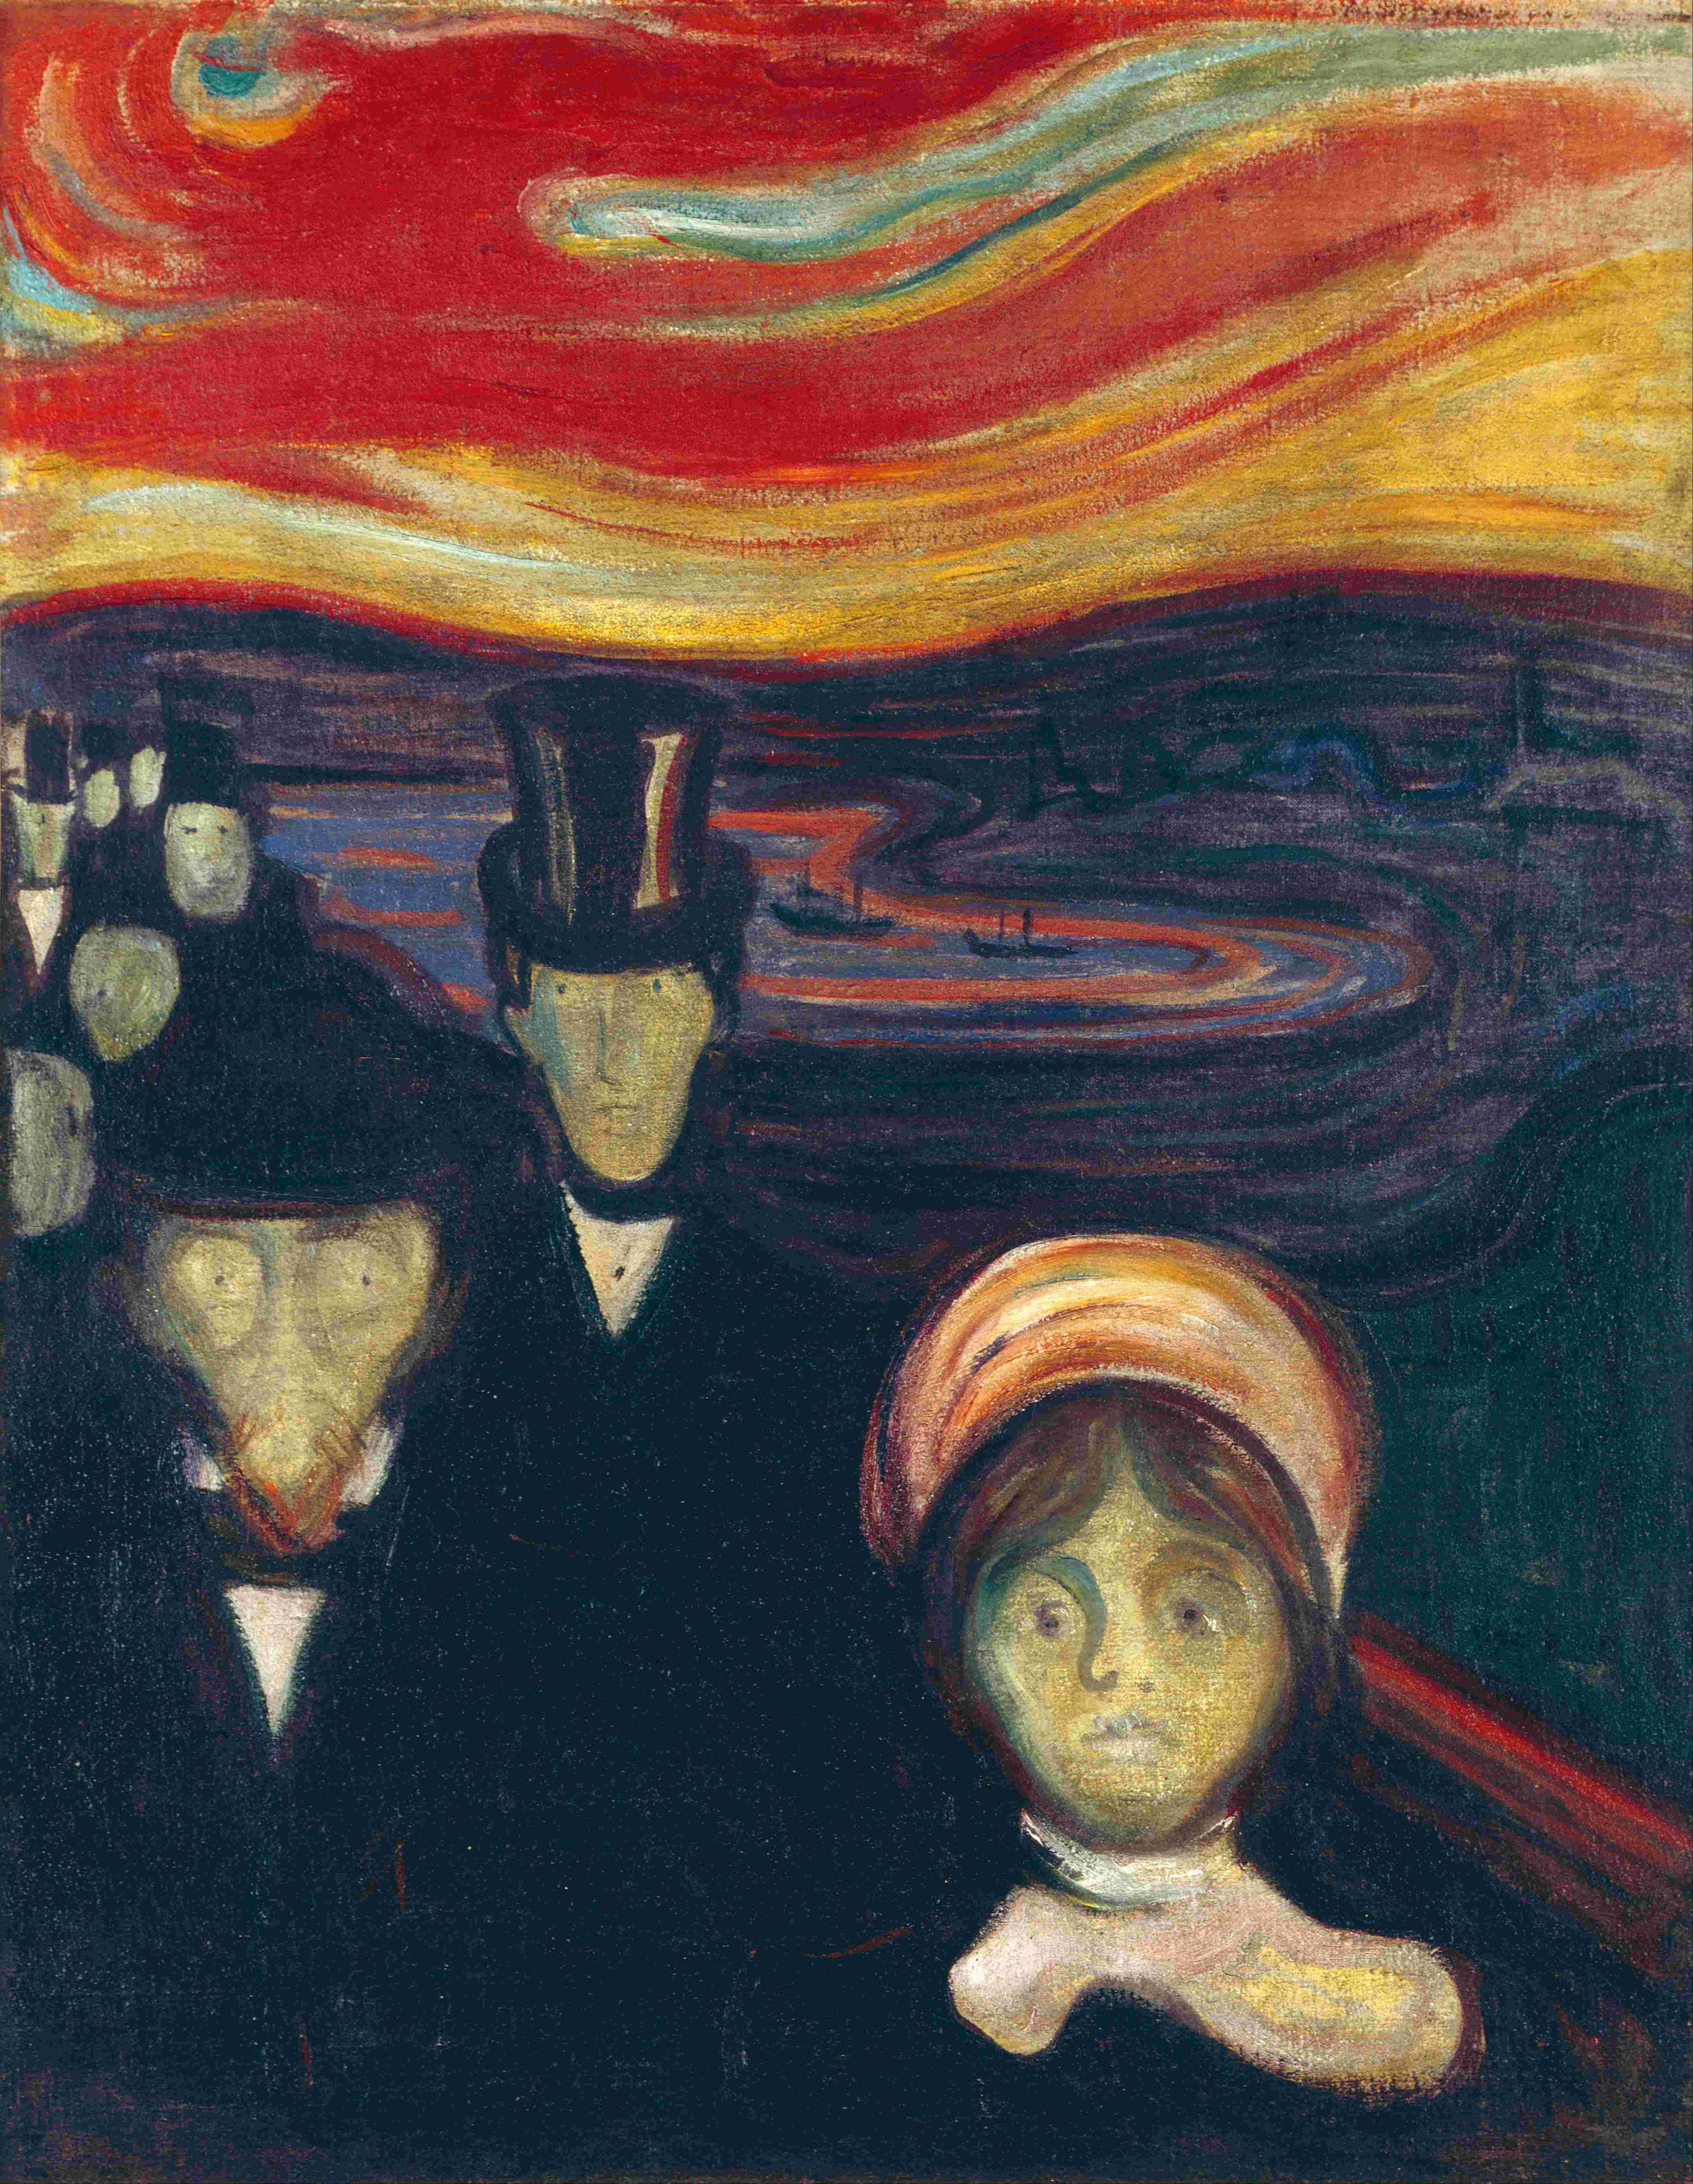 Edvard Munch: Angst (c) Public domain, via Wikimedia Commons